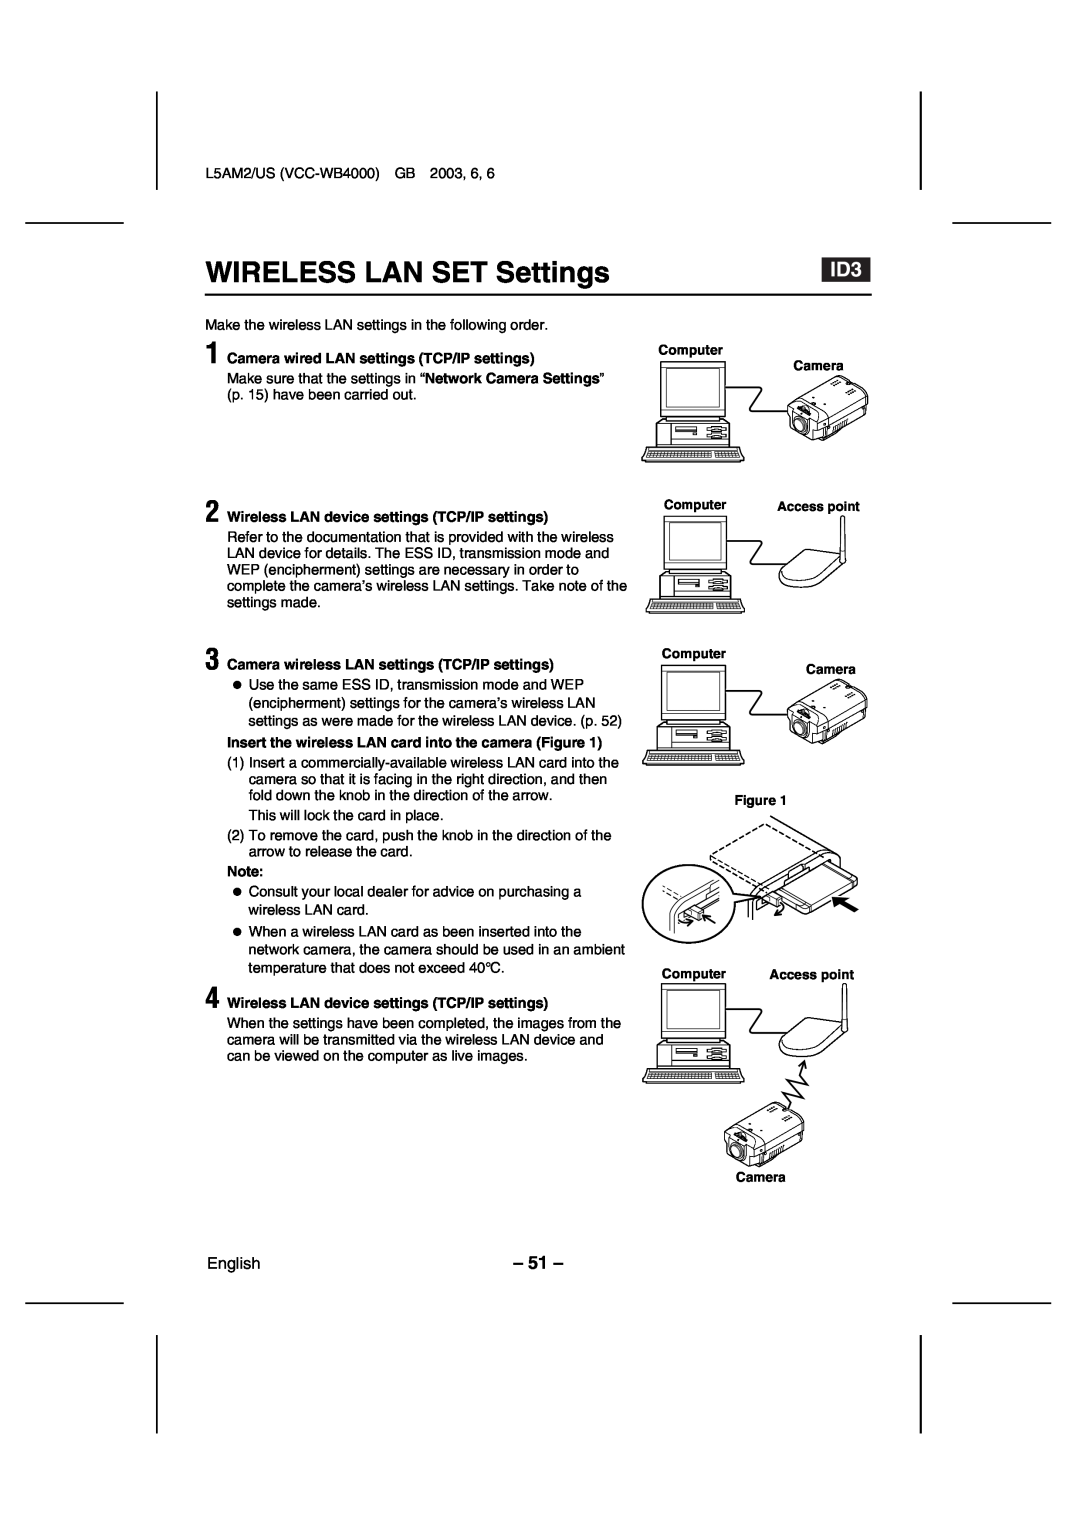 Sanyo VCC-WB4000 instruction manual WIRELESS LAN SET Settings, Camera wired LAN settings TCP/IP settings, English 